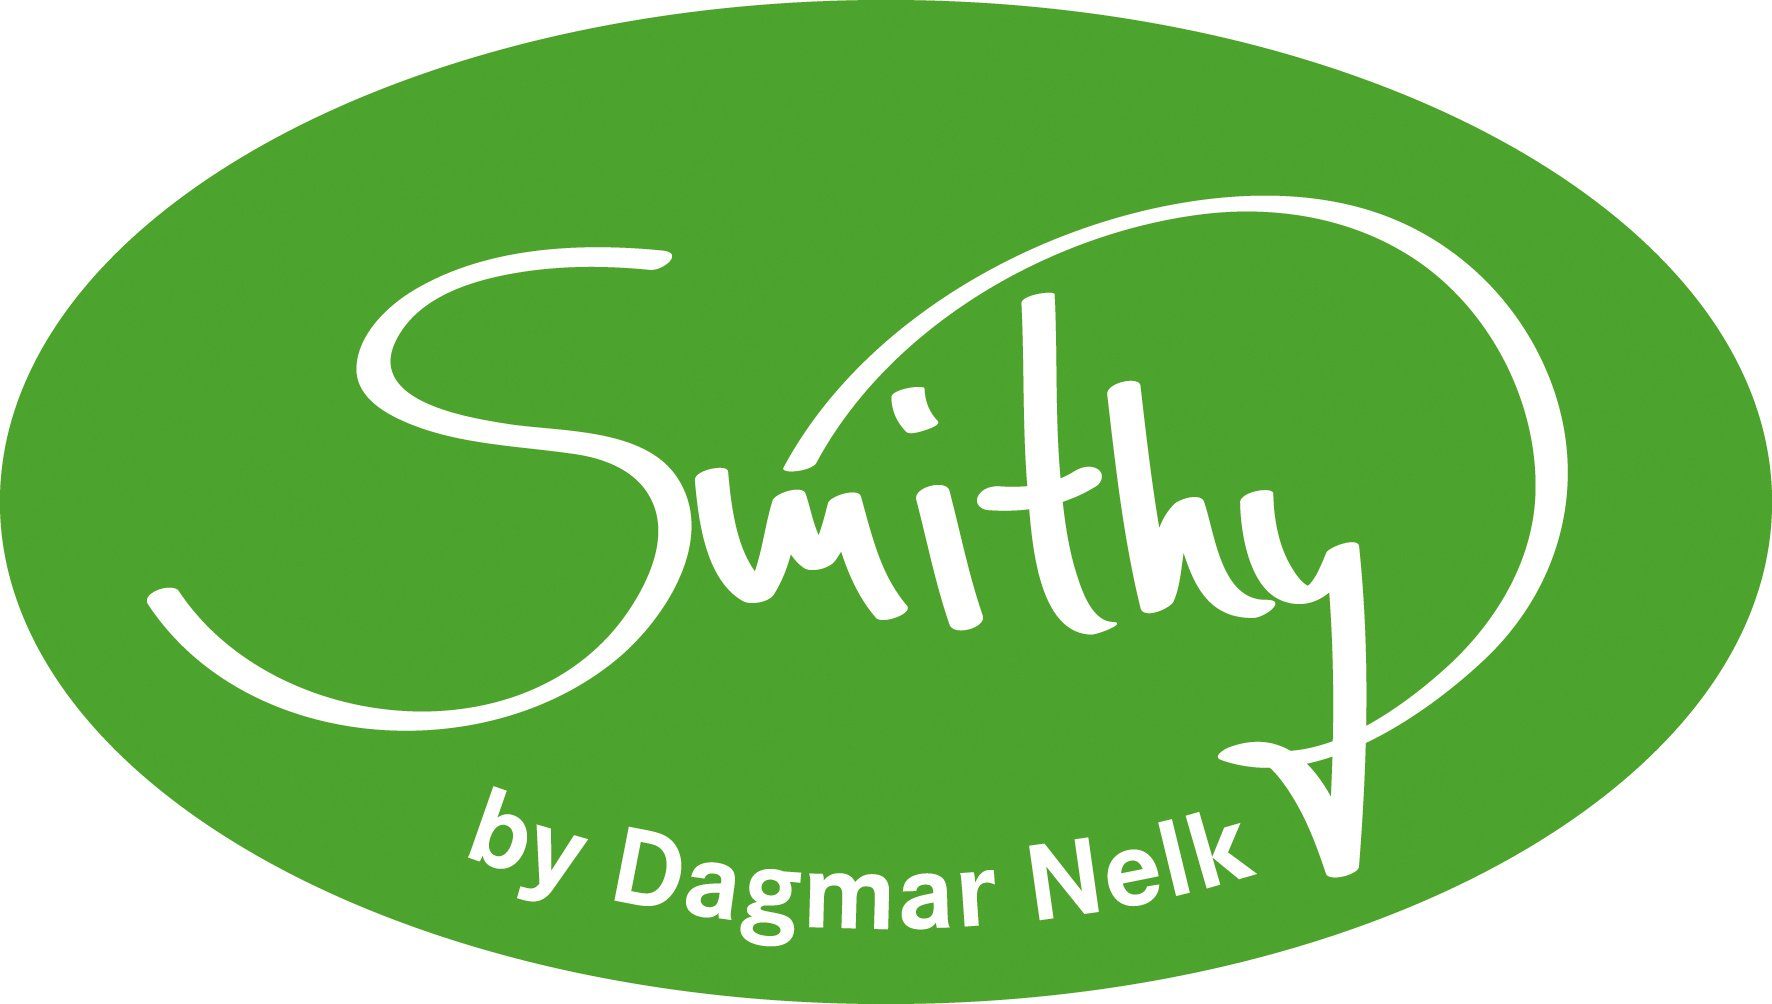 Smithy